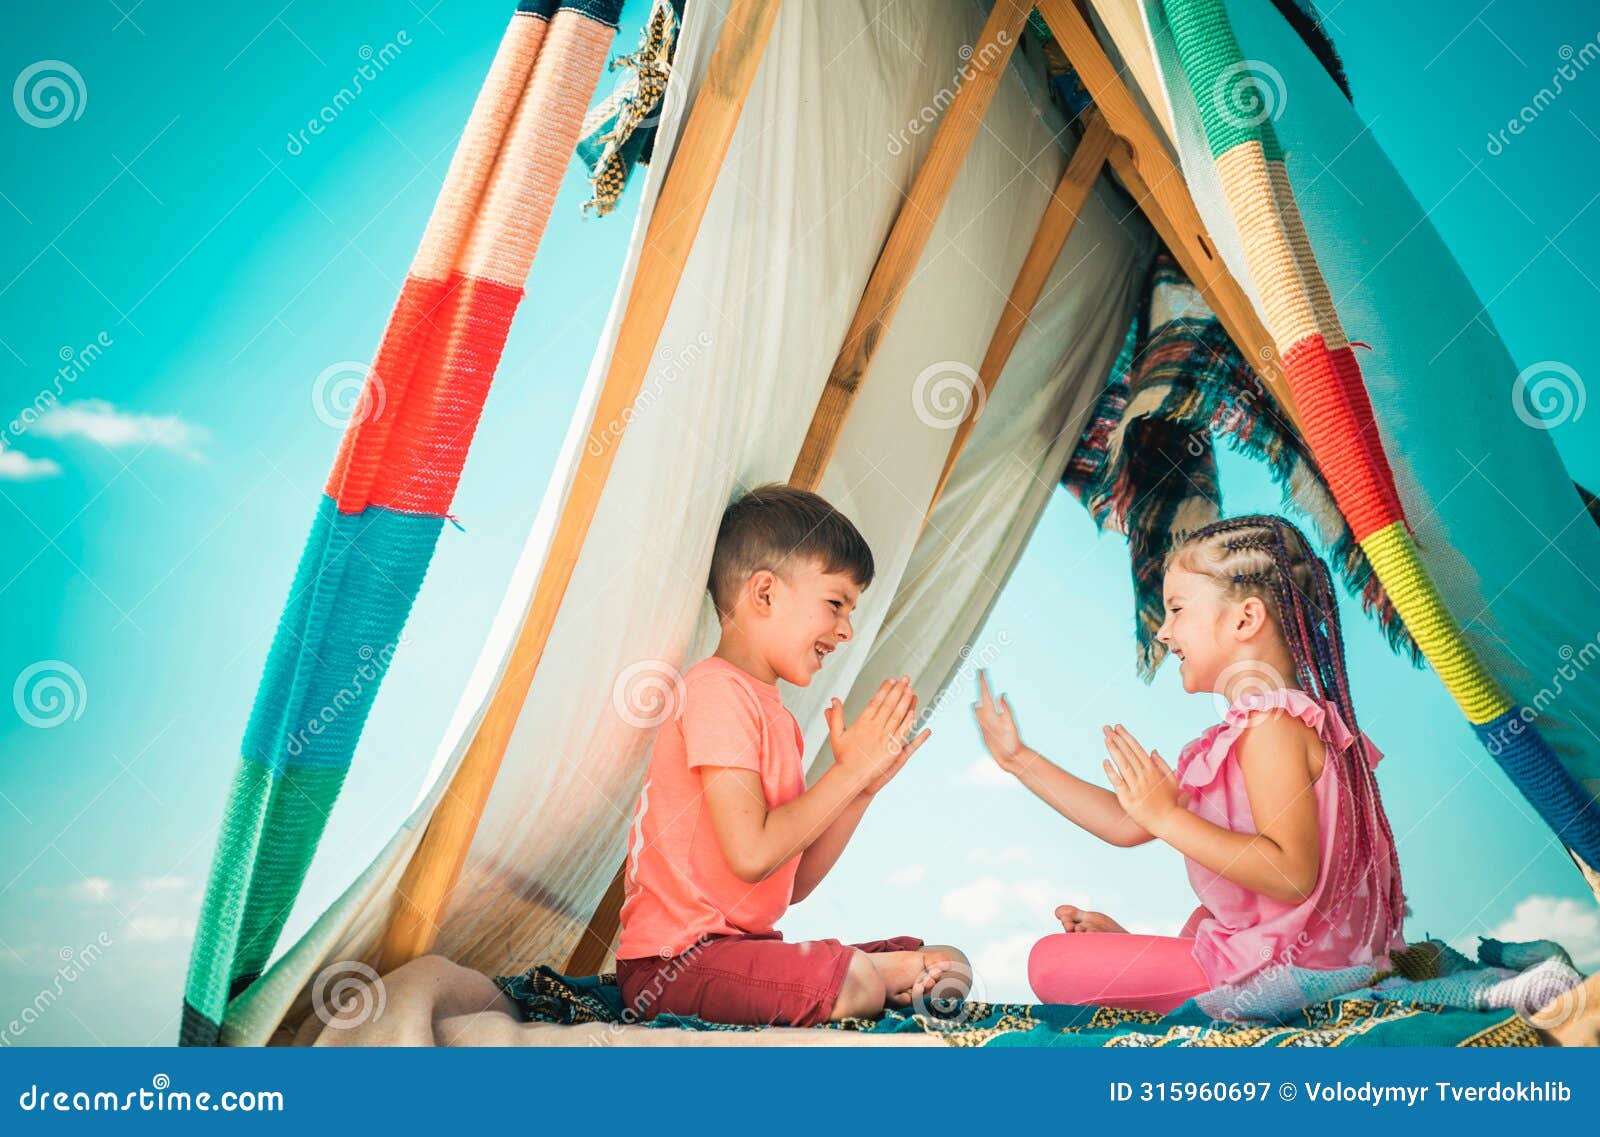 backyard party. happy childhood concept. children adaptation. summer weekend. kids outdoor vacation.